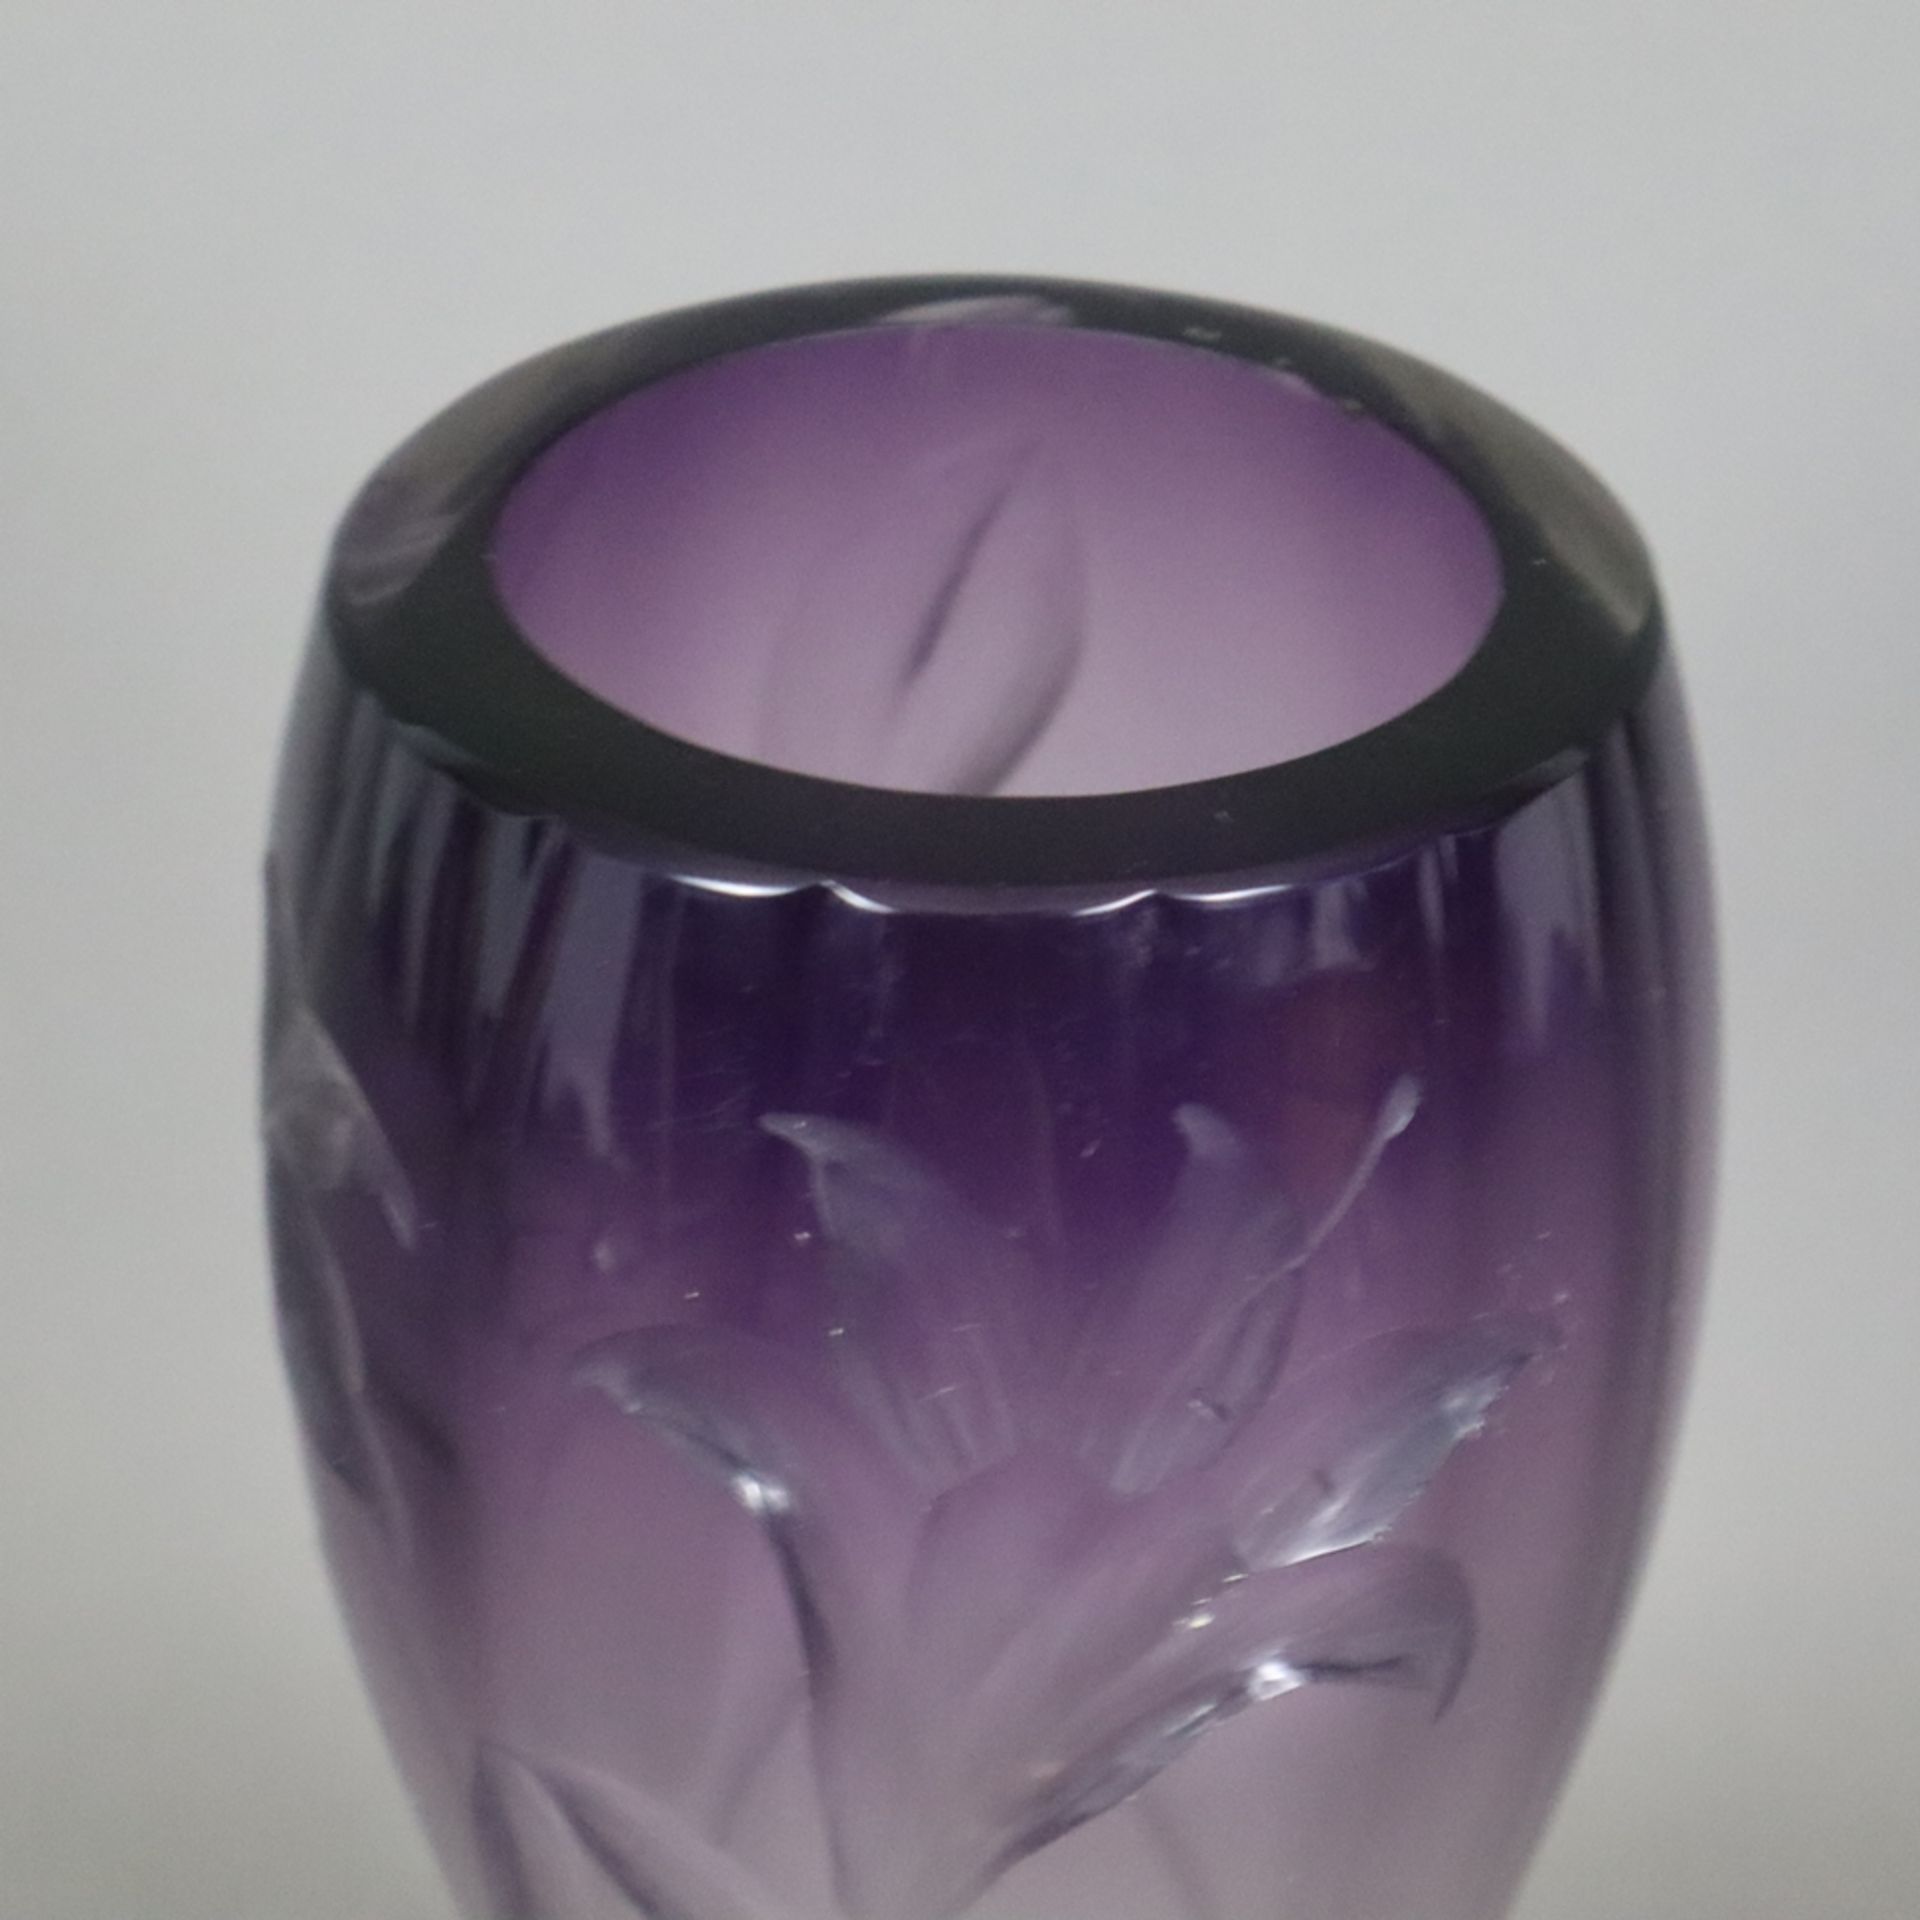 Jugendstil-Glasvase - wohl Ludwig Moser, Karlsbad, dickwandiges farbloses Glas mit violett verlaufe - Bild 2 aus 8